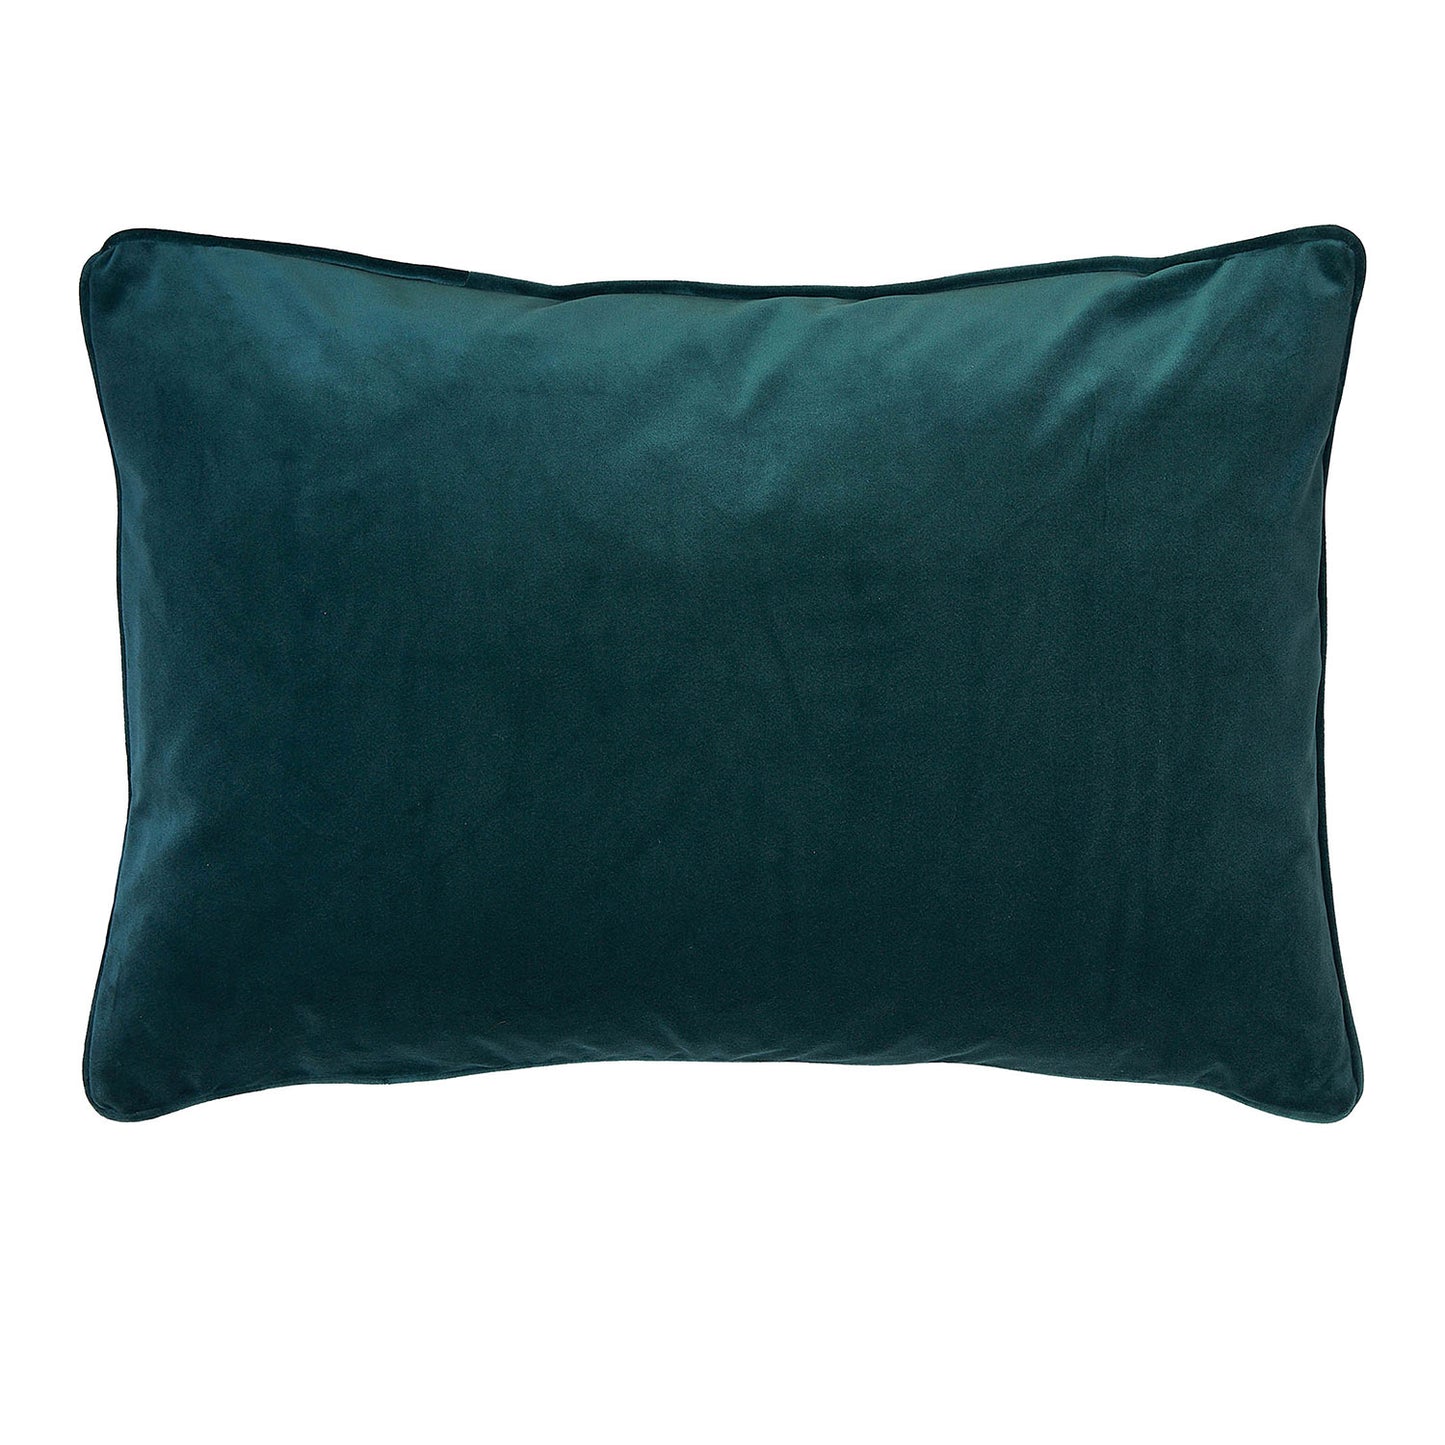 Clarissa Hulse Teasel Peacock Velvet Cushion (40cm x 60cm)